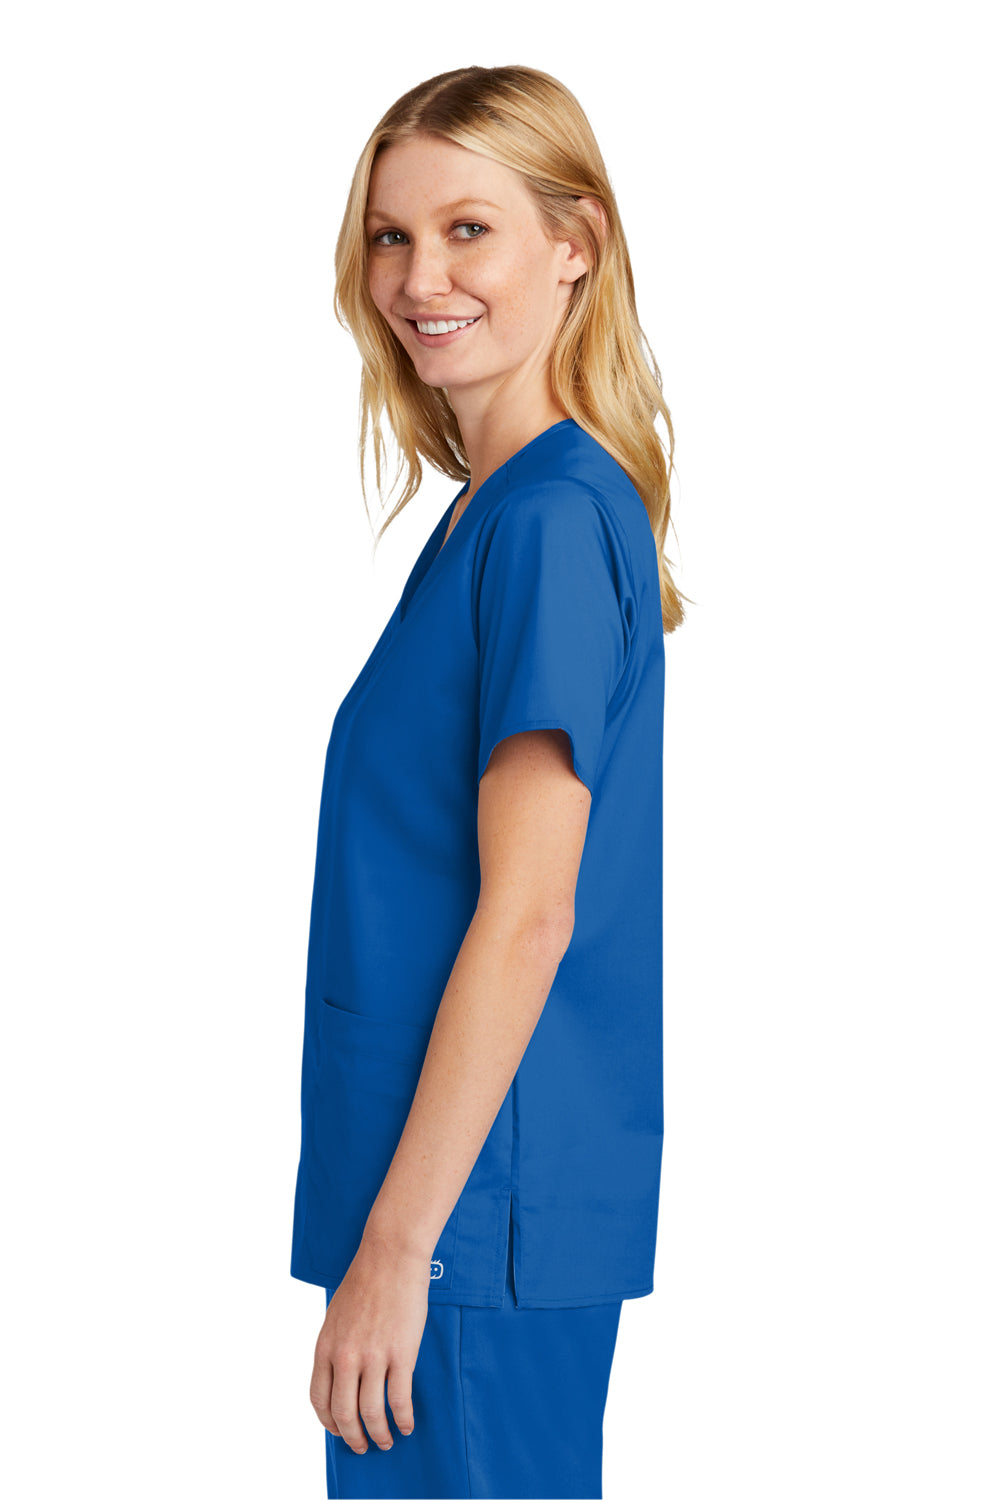 Wonderwink WW4560 WorkFlex Short Sleeve V-Neck Shirt Royal Blue Side